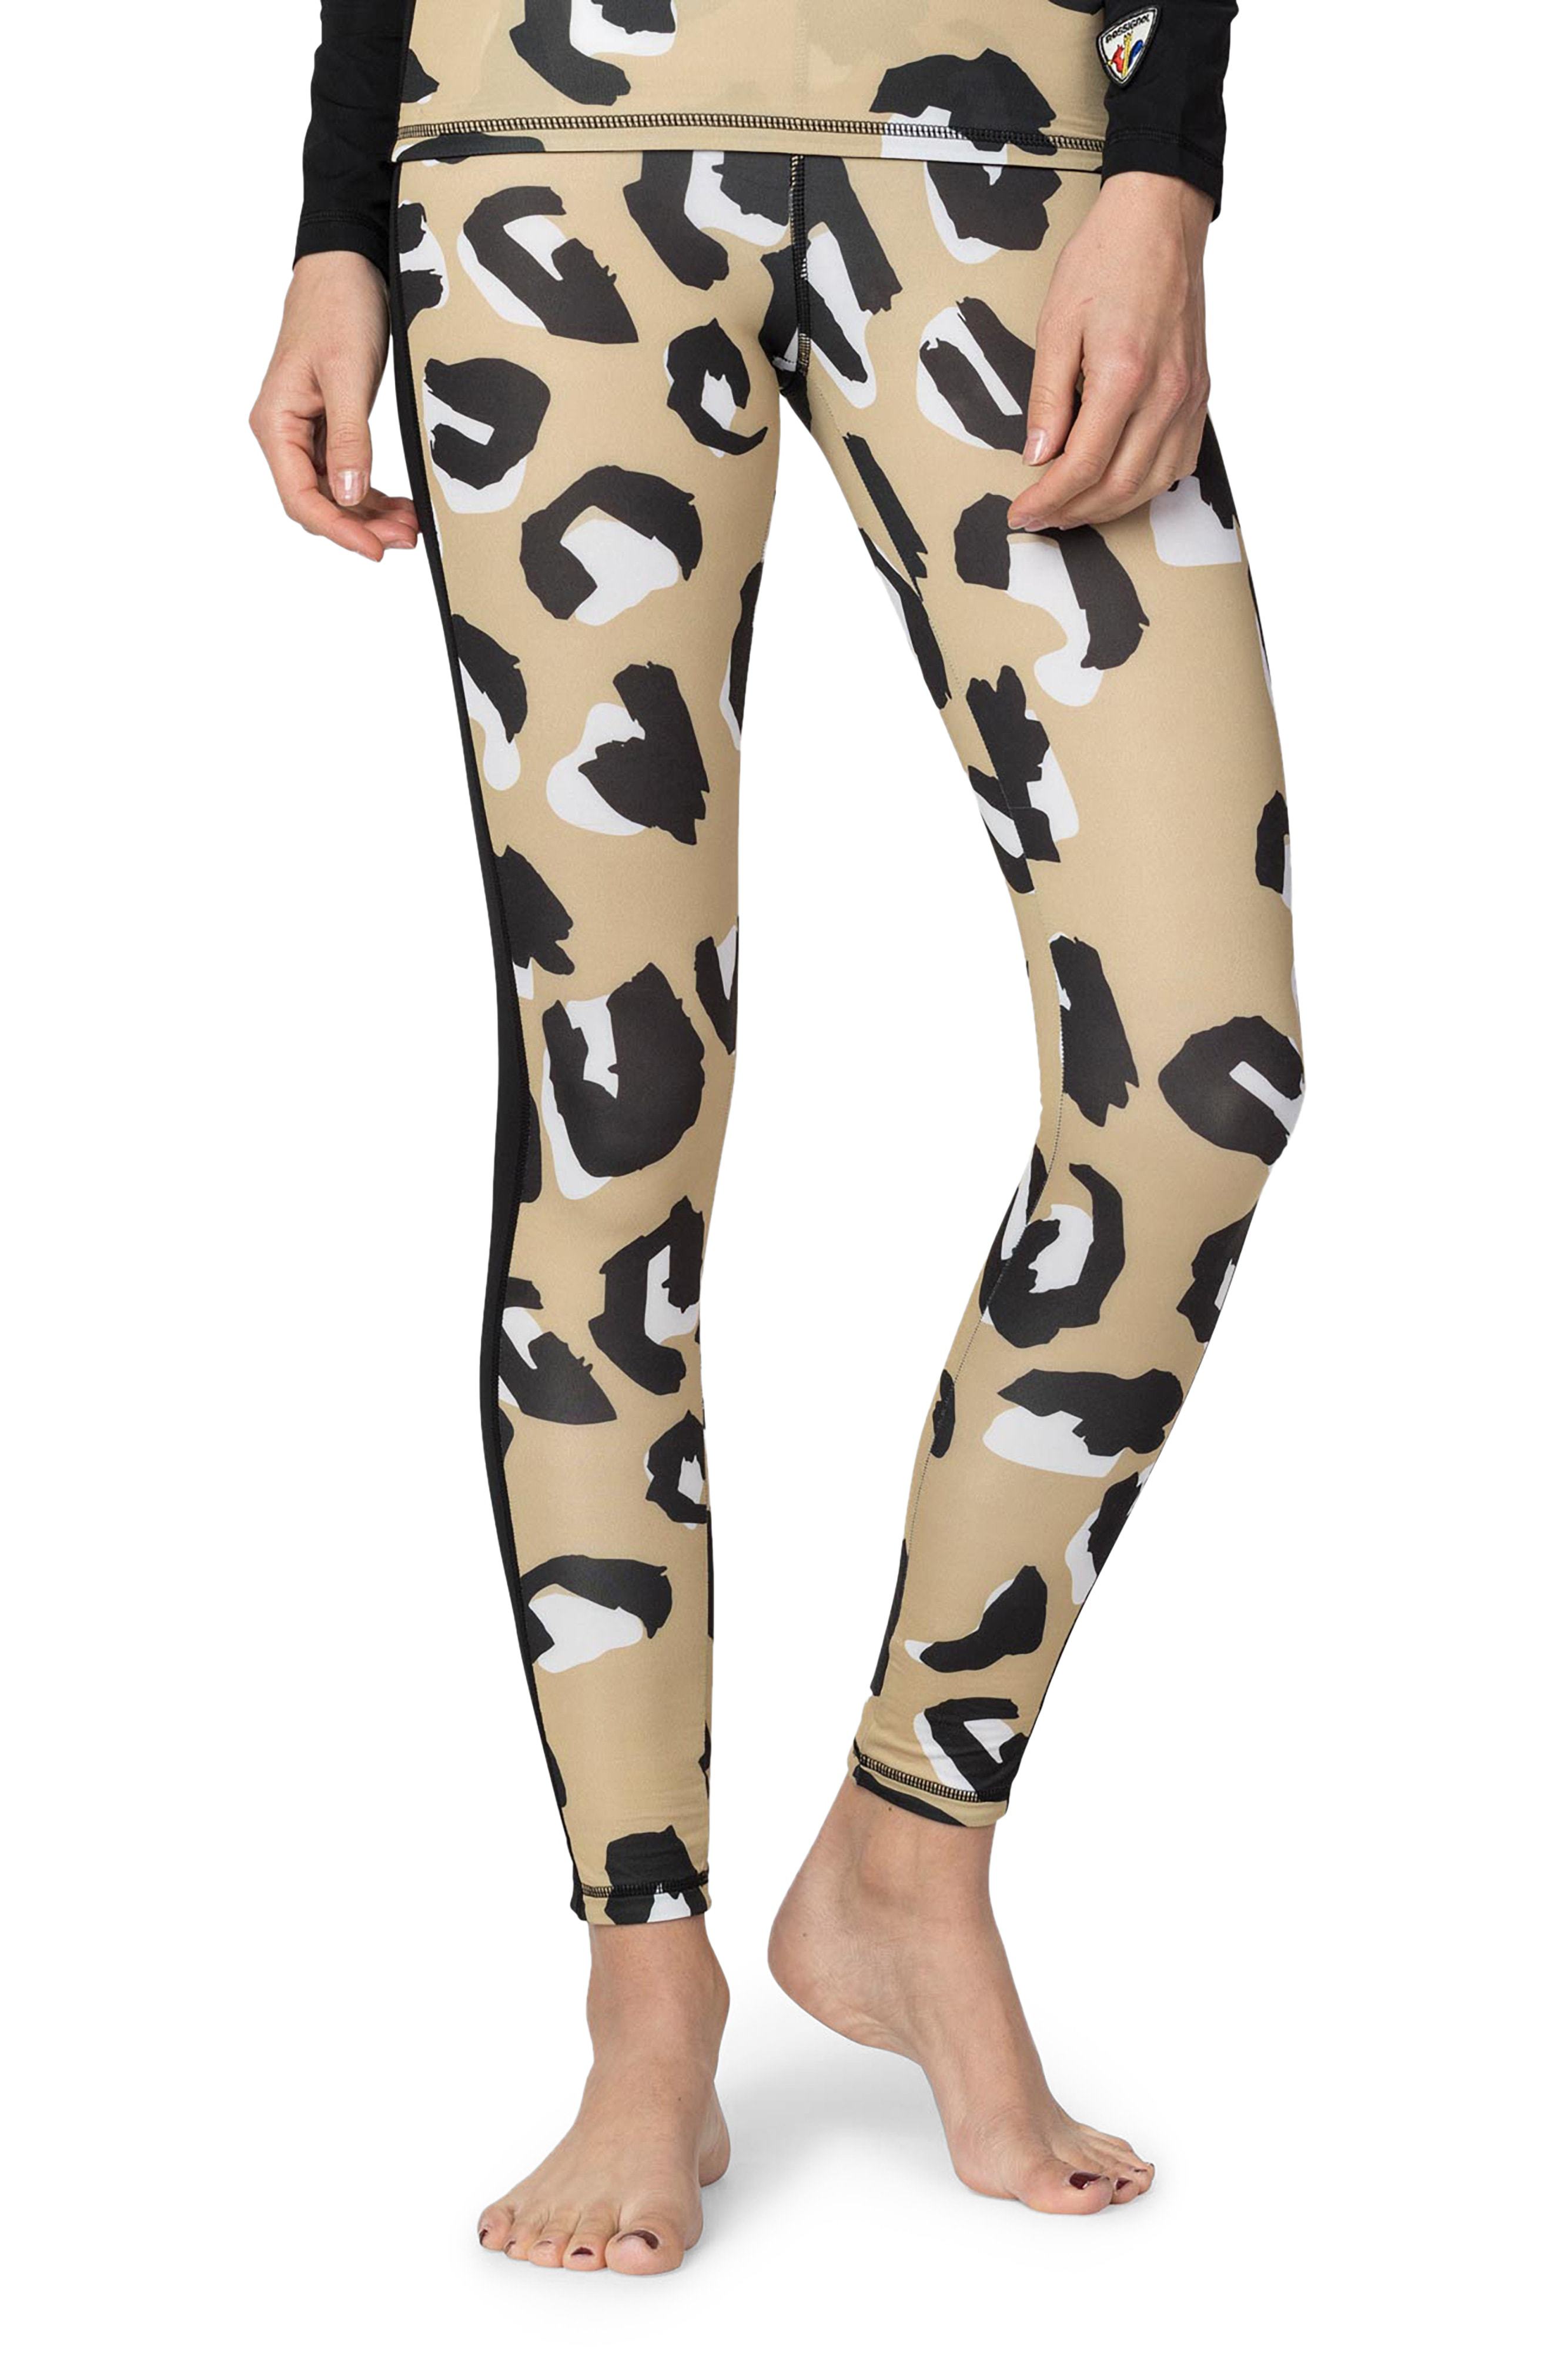 https://cdn.lookastic.com/tan-leopard-leggings/wenatchee-base-layer-tights-original-9658204.jpg